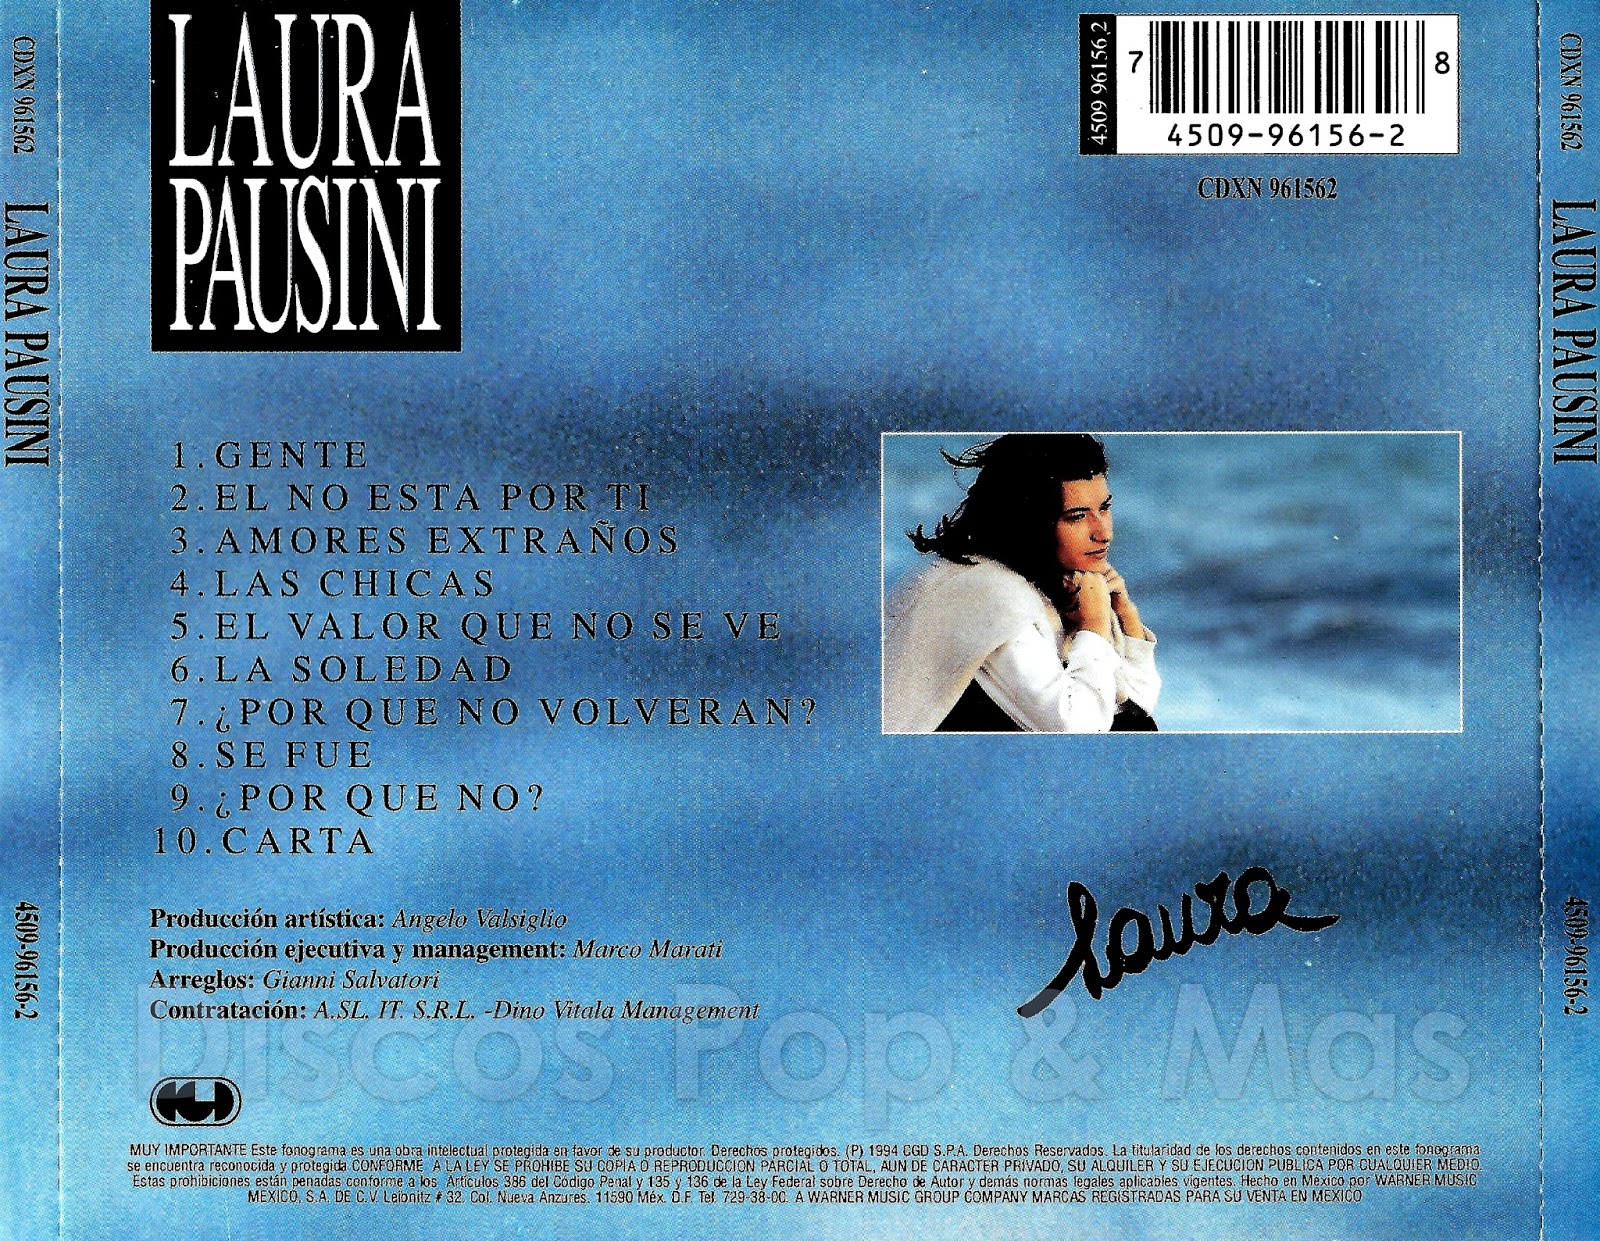 Discos Pop And Mas Laura Pausini Laura Pausini